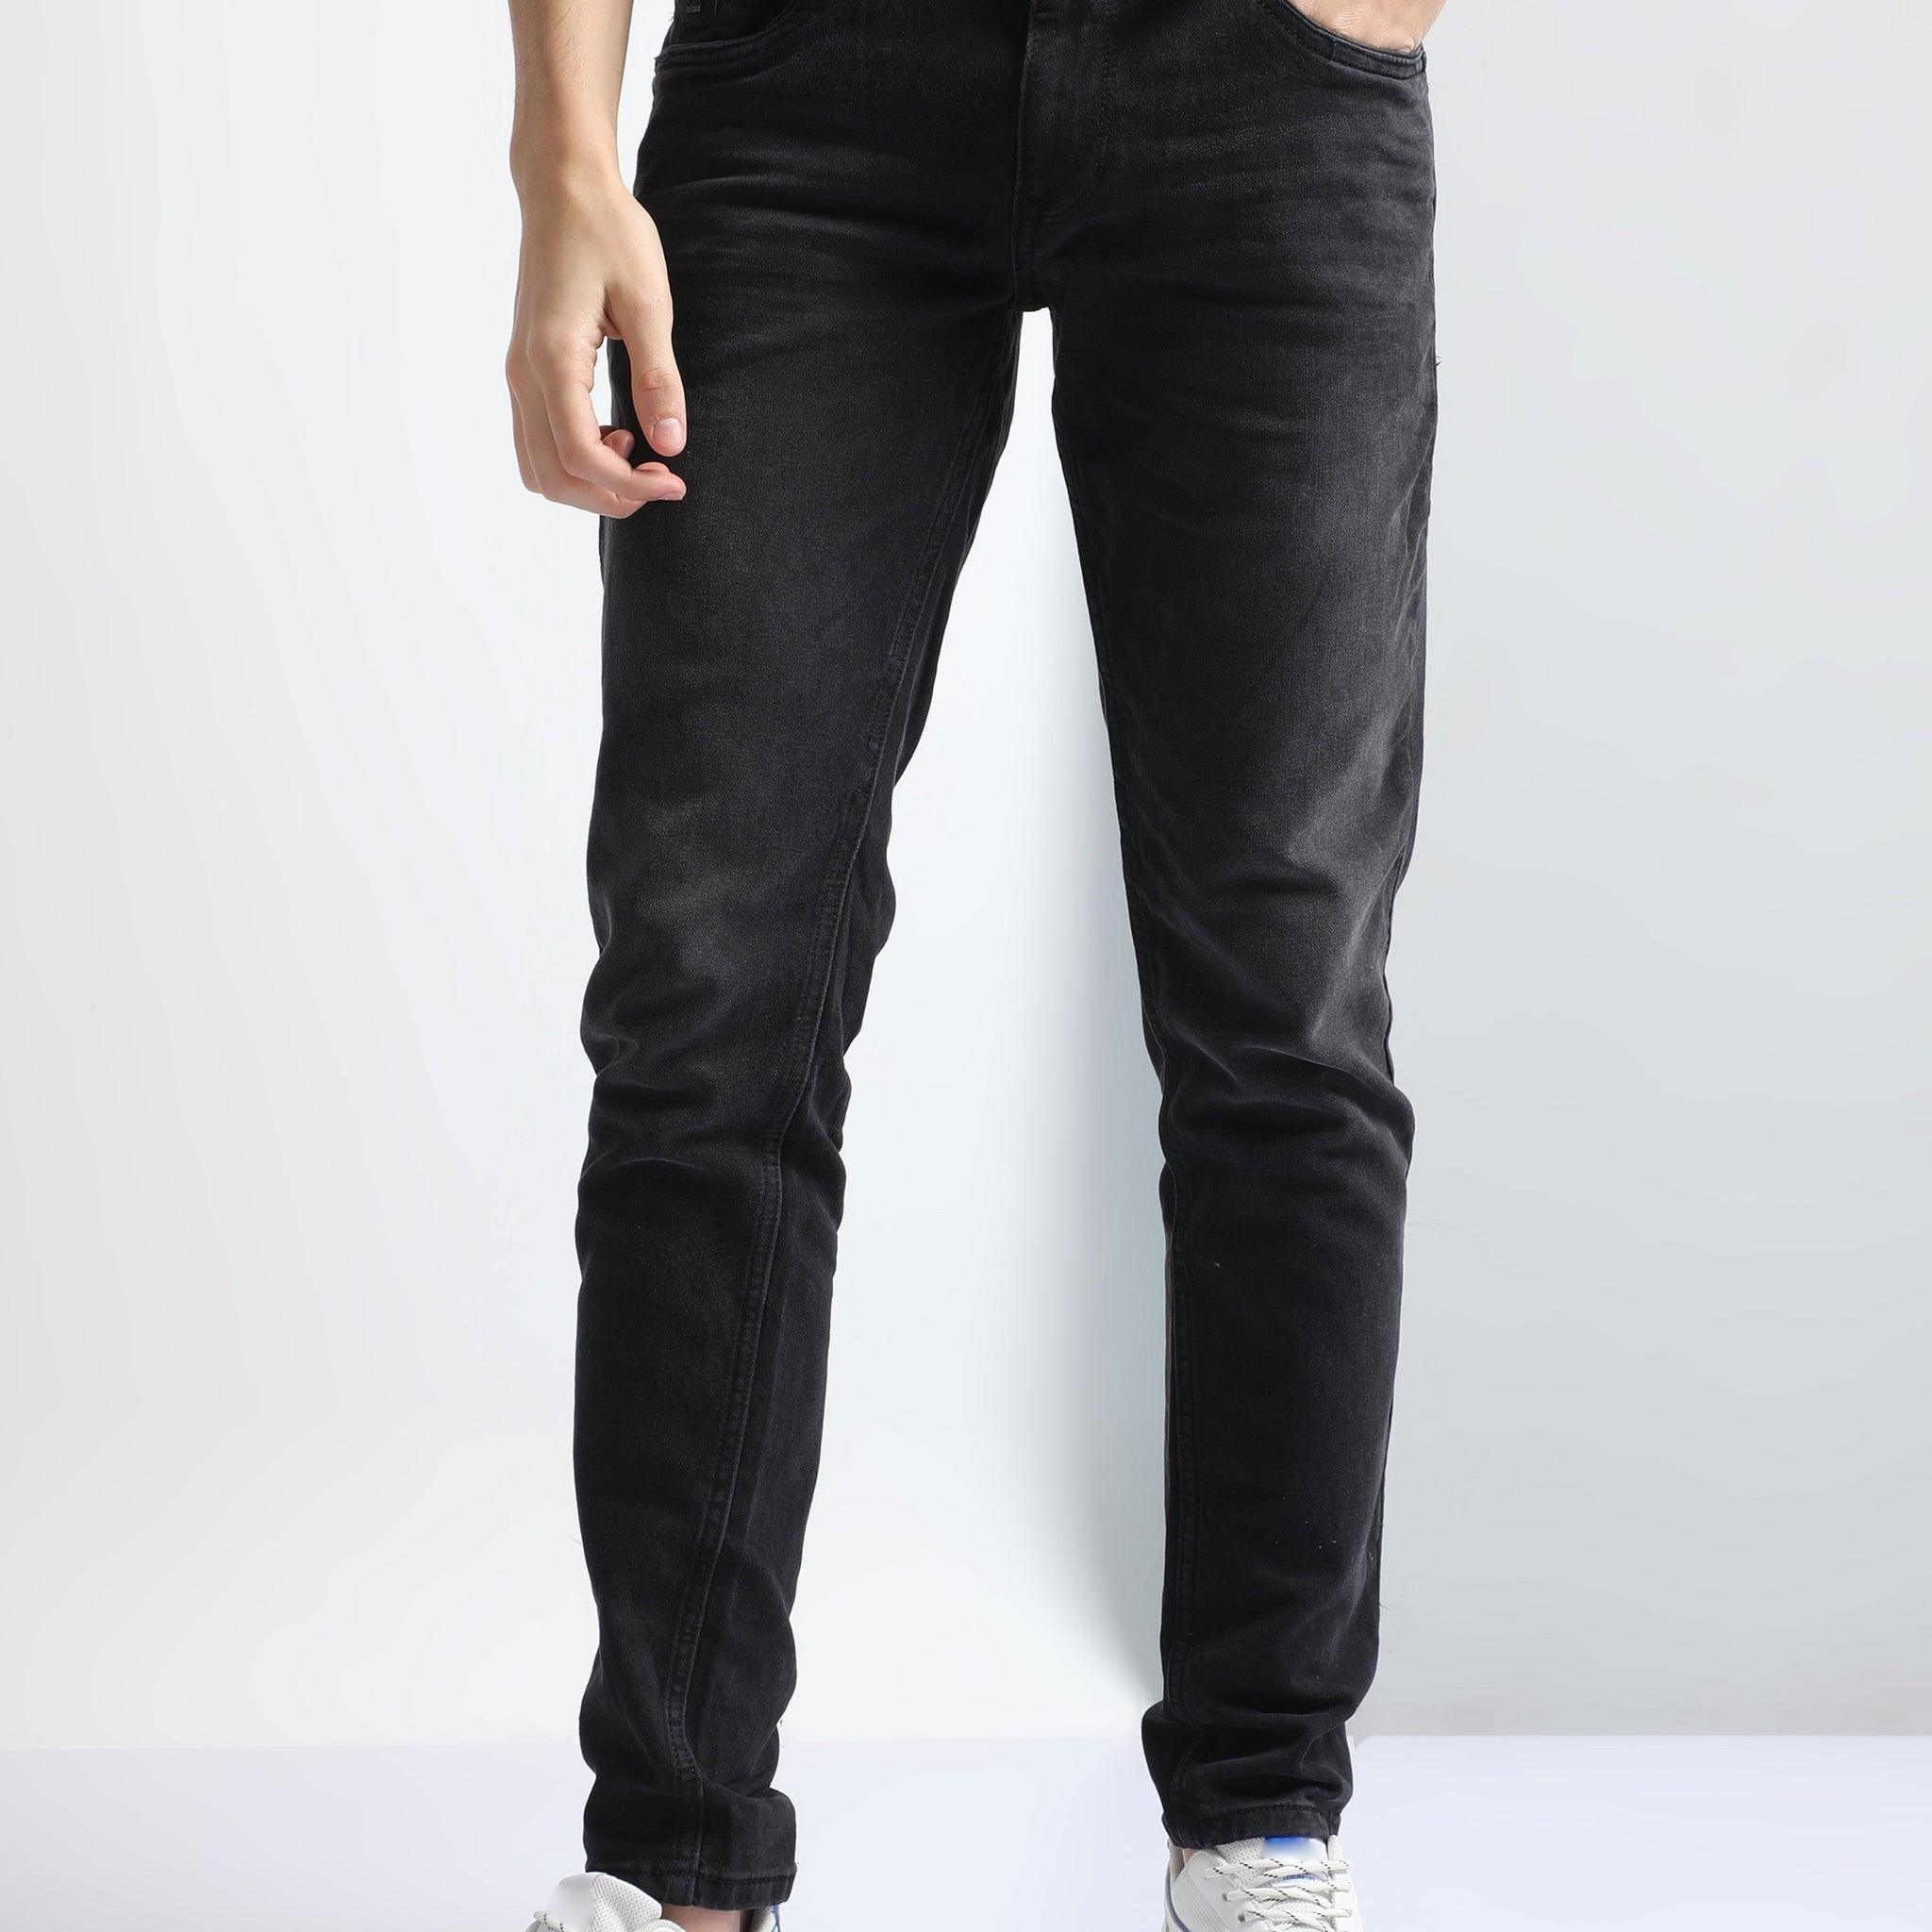 Black Men's Faded Wash Denim Jeans